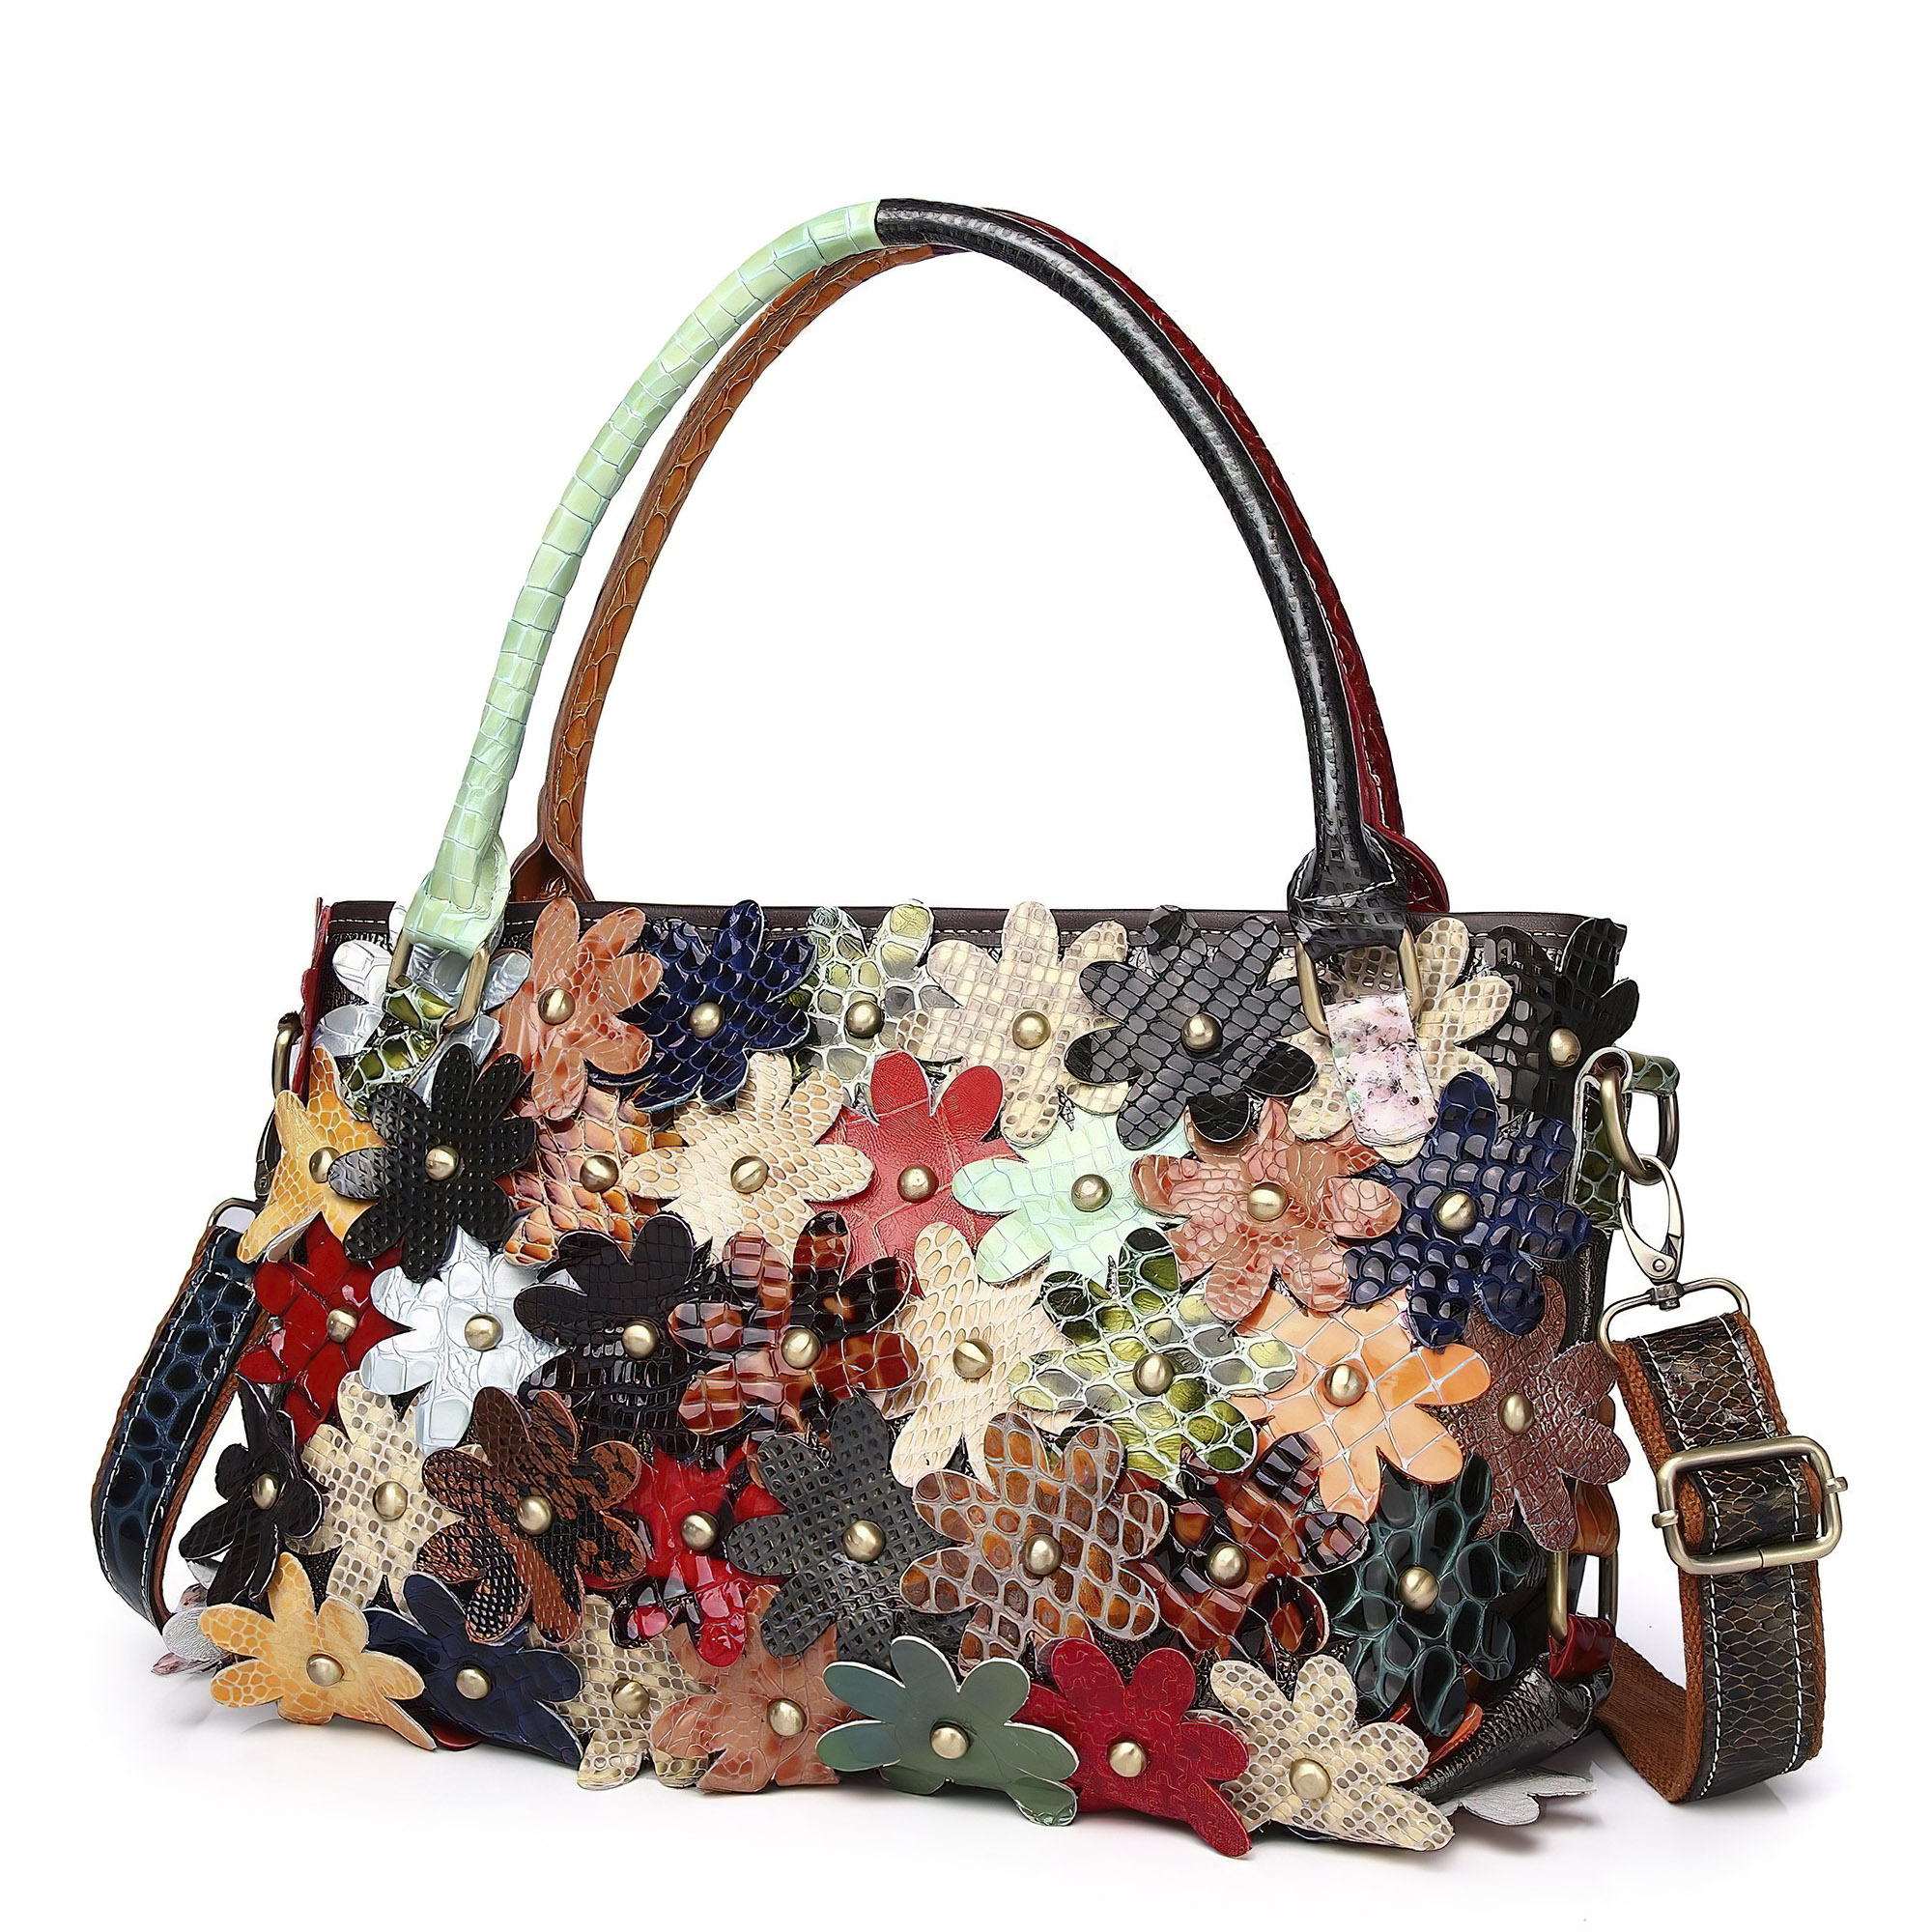 Handmade flower patchwork leather bag